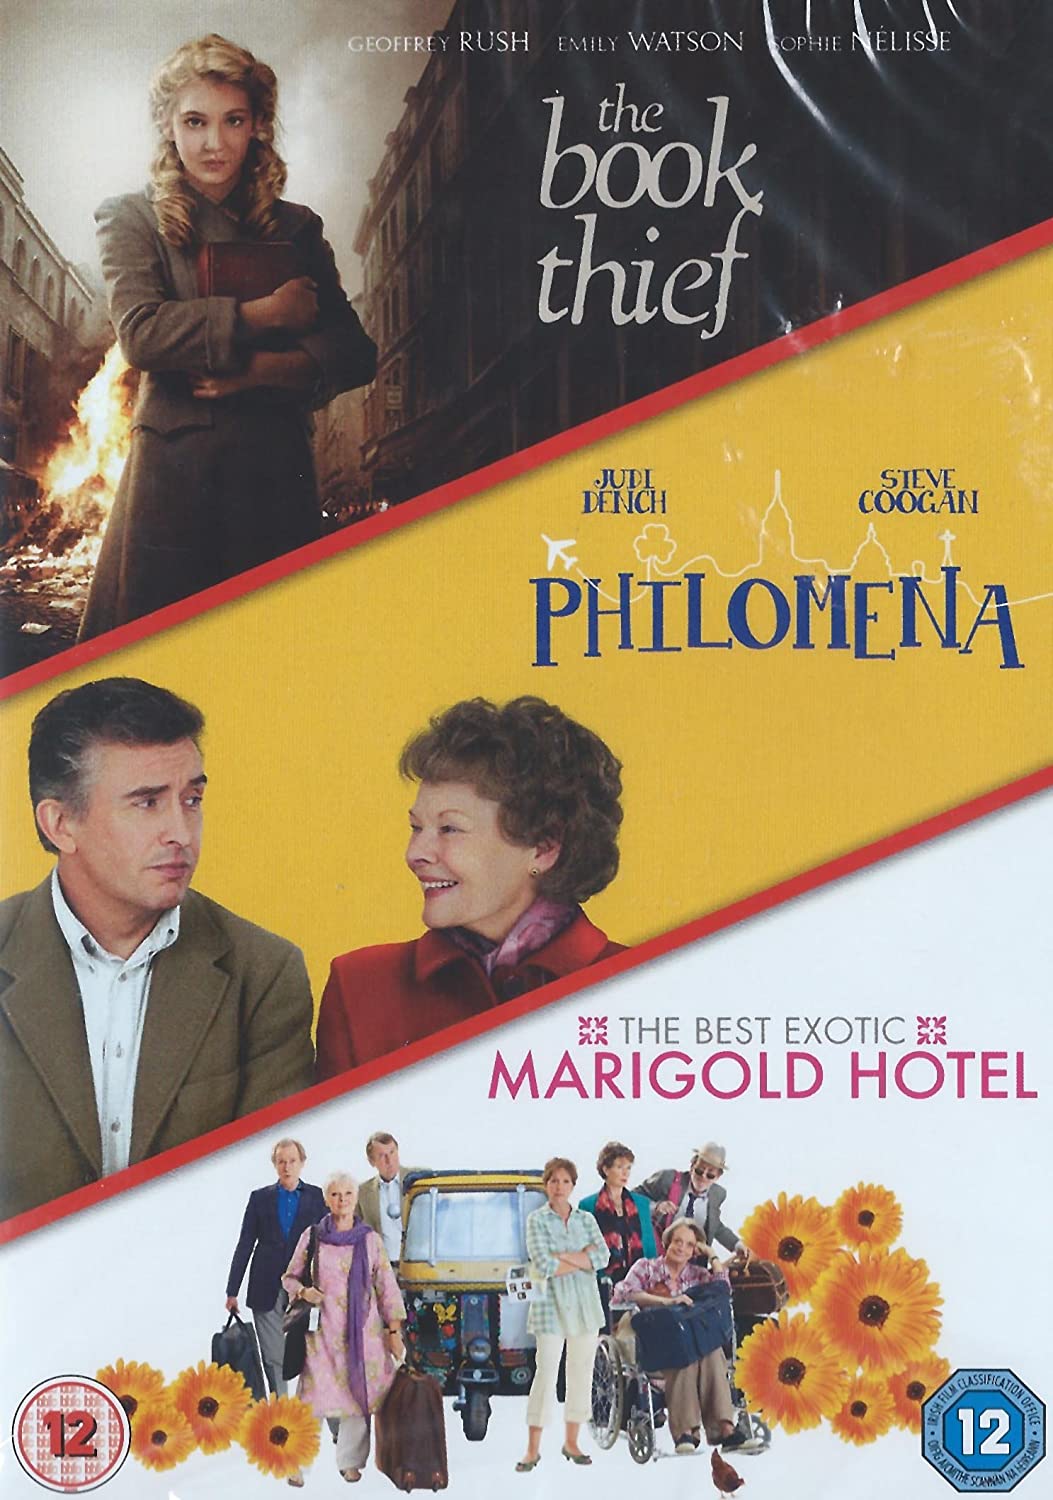 The Book Thief / Philomena / The Best Exotic Marigold Hotel 3 DVD Set - Drama/Comedy [DVD]